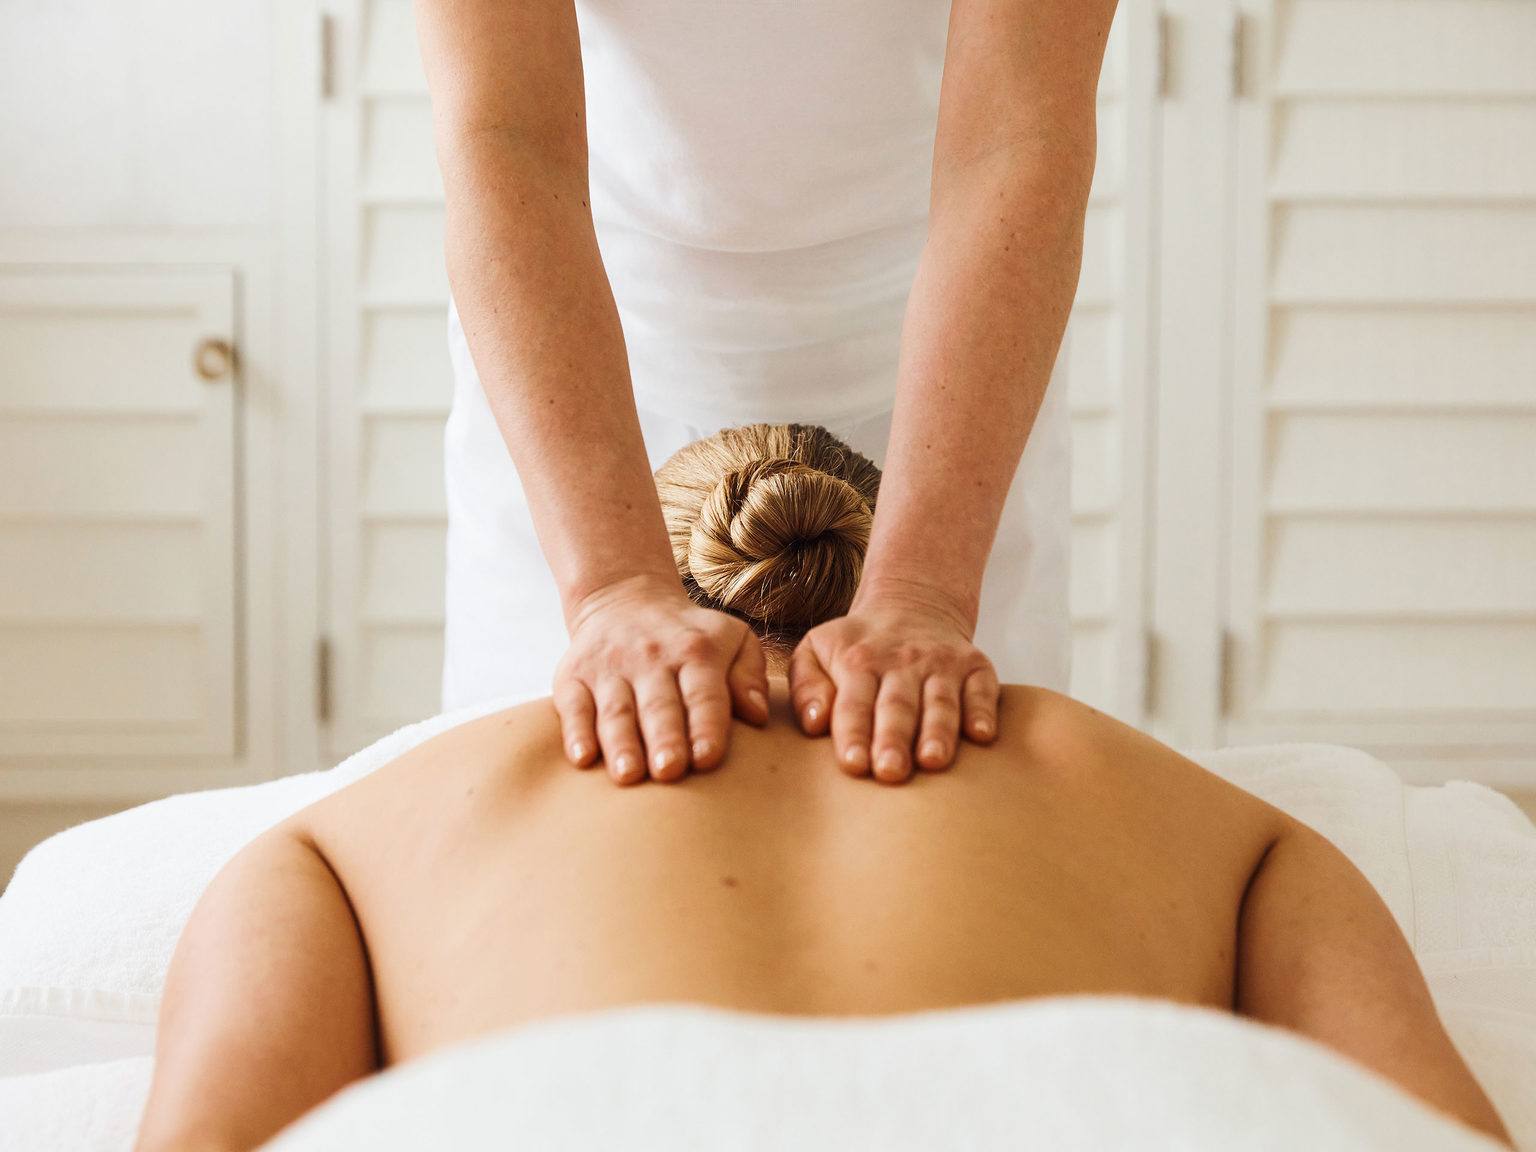 A woman having a back massage at a spa